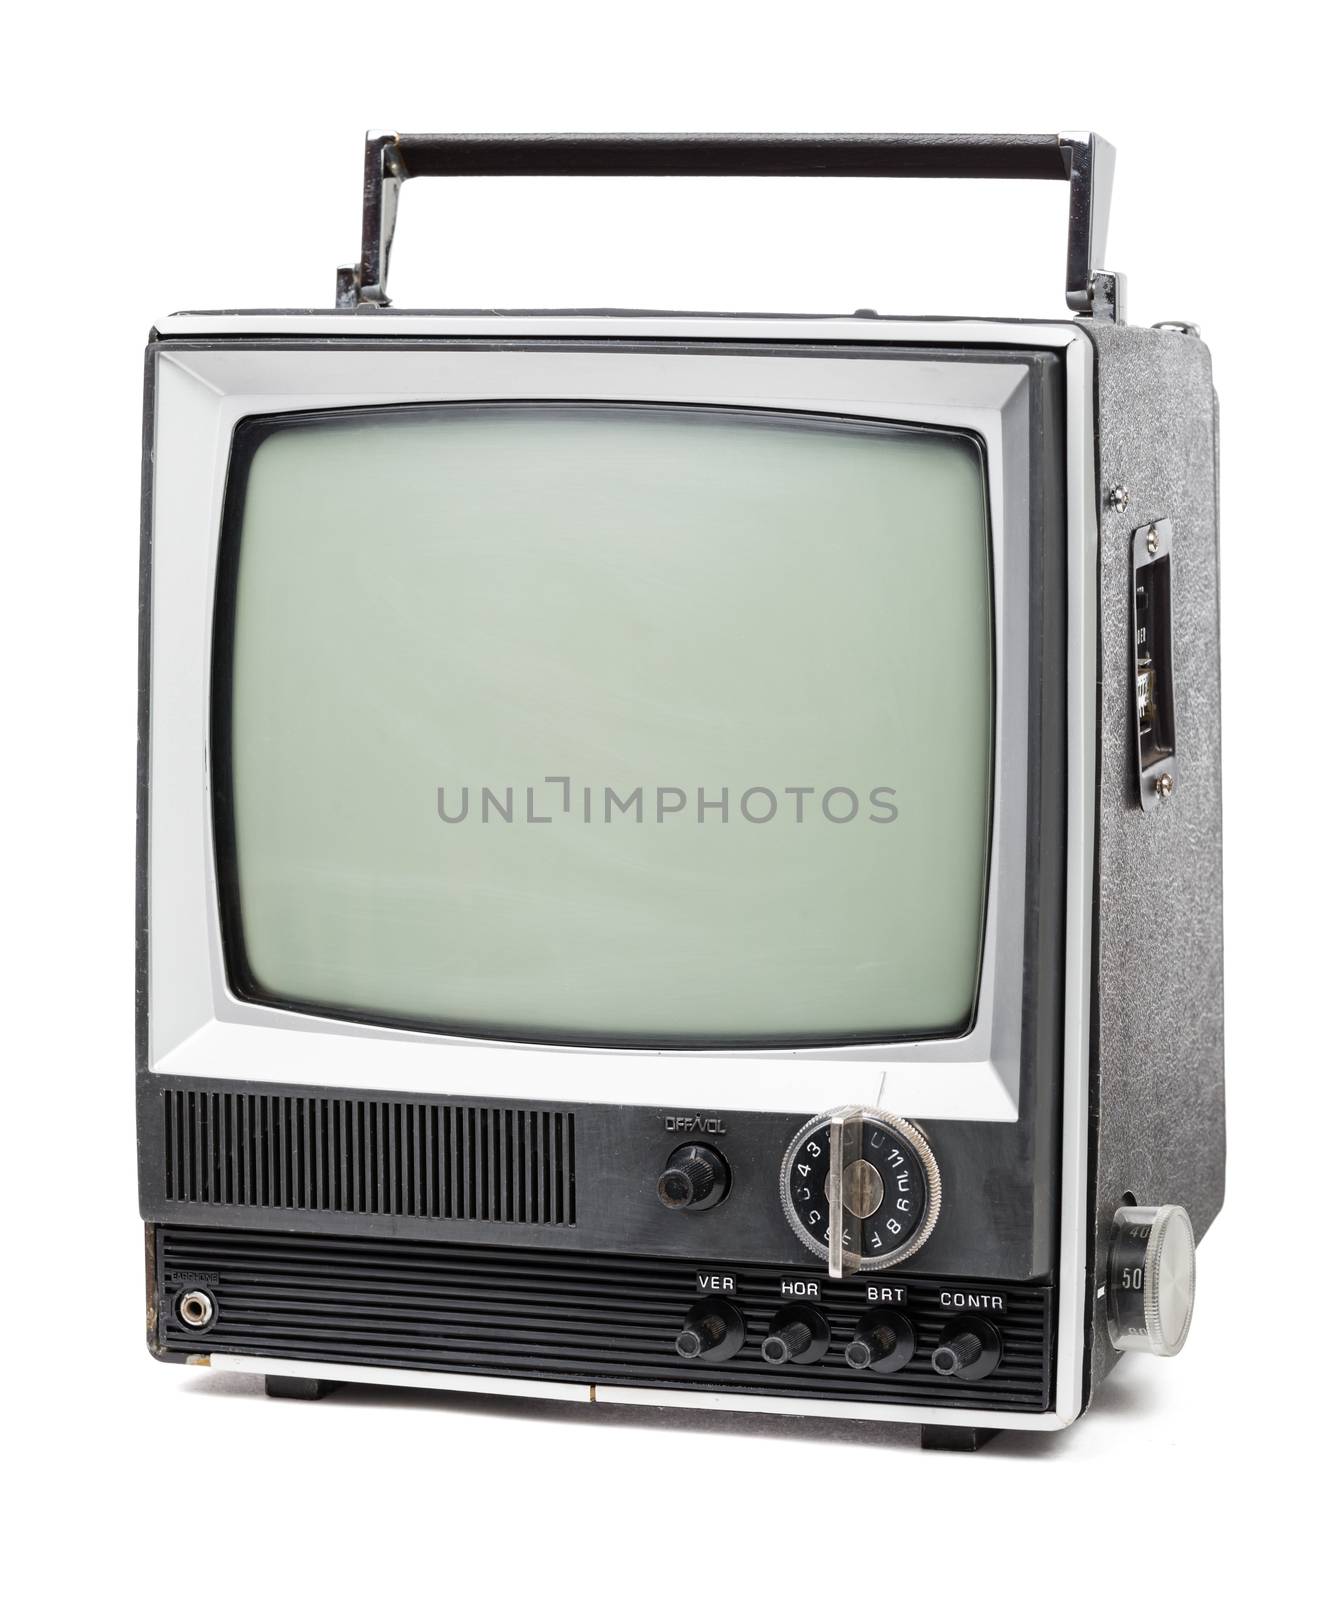 Old handheld television by naumoid